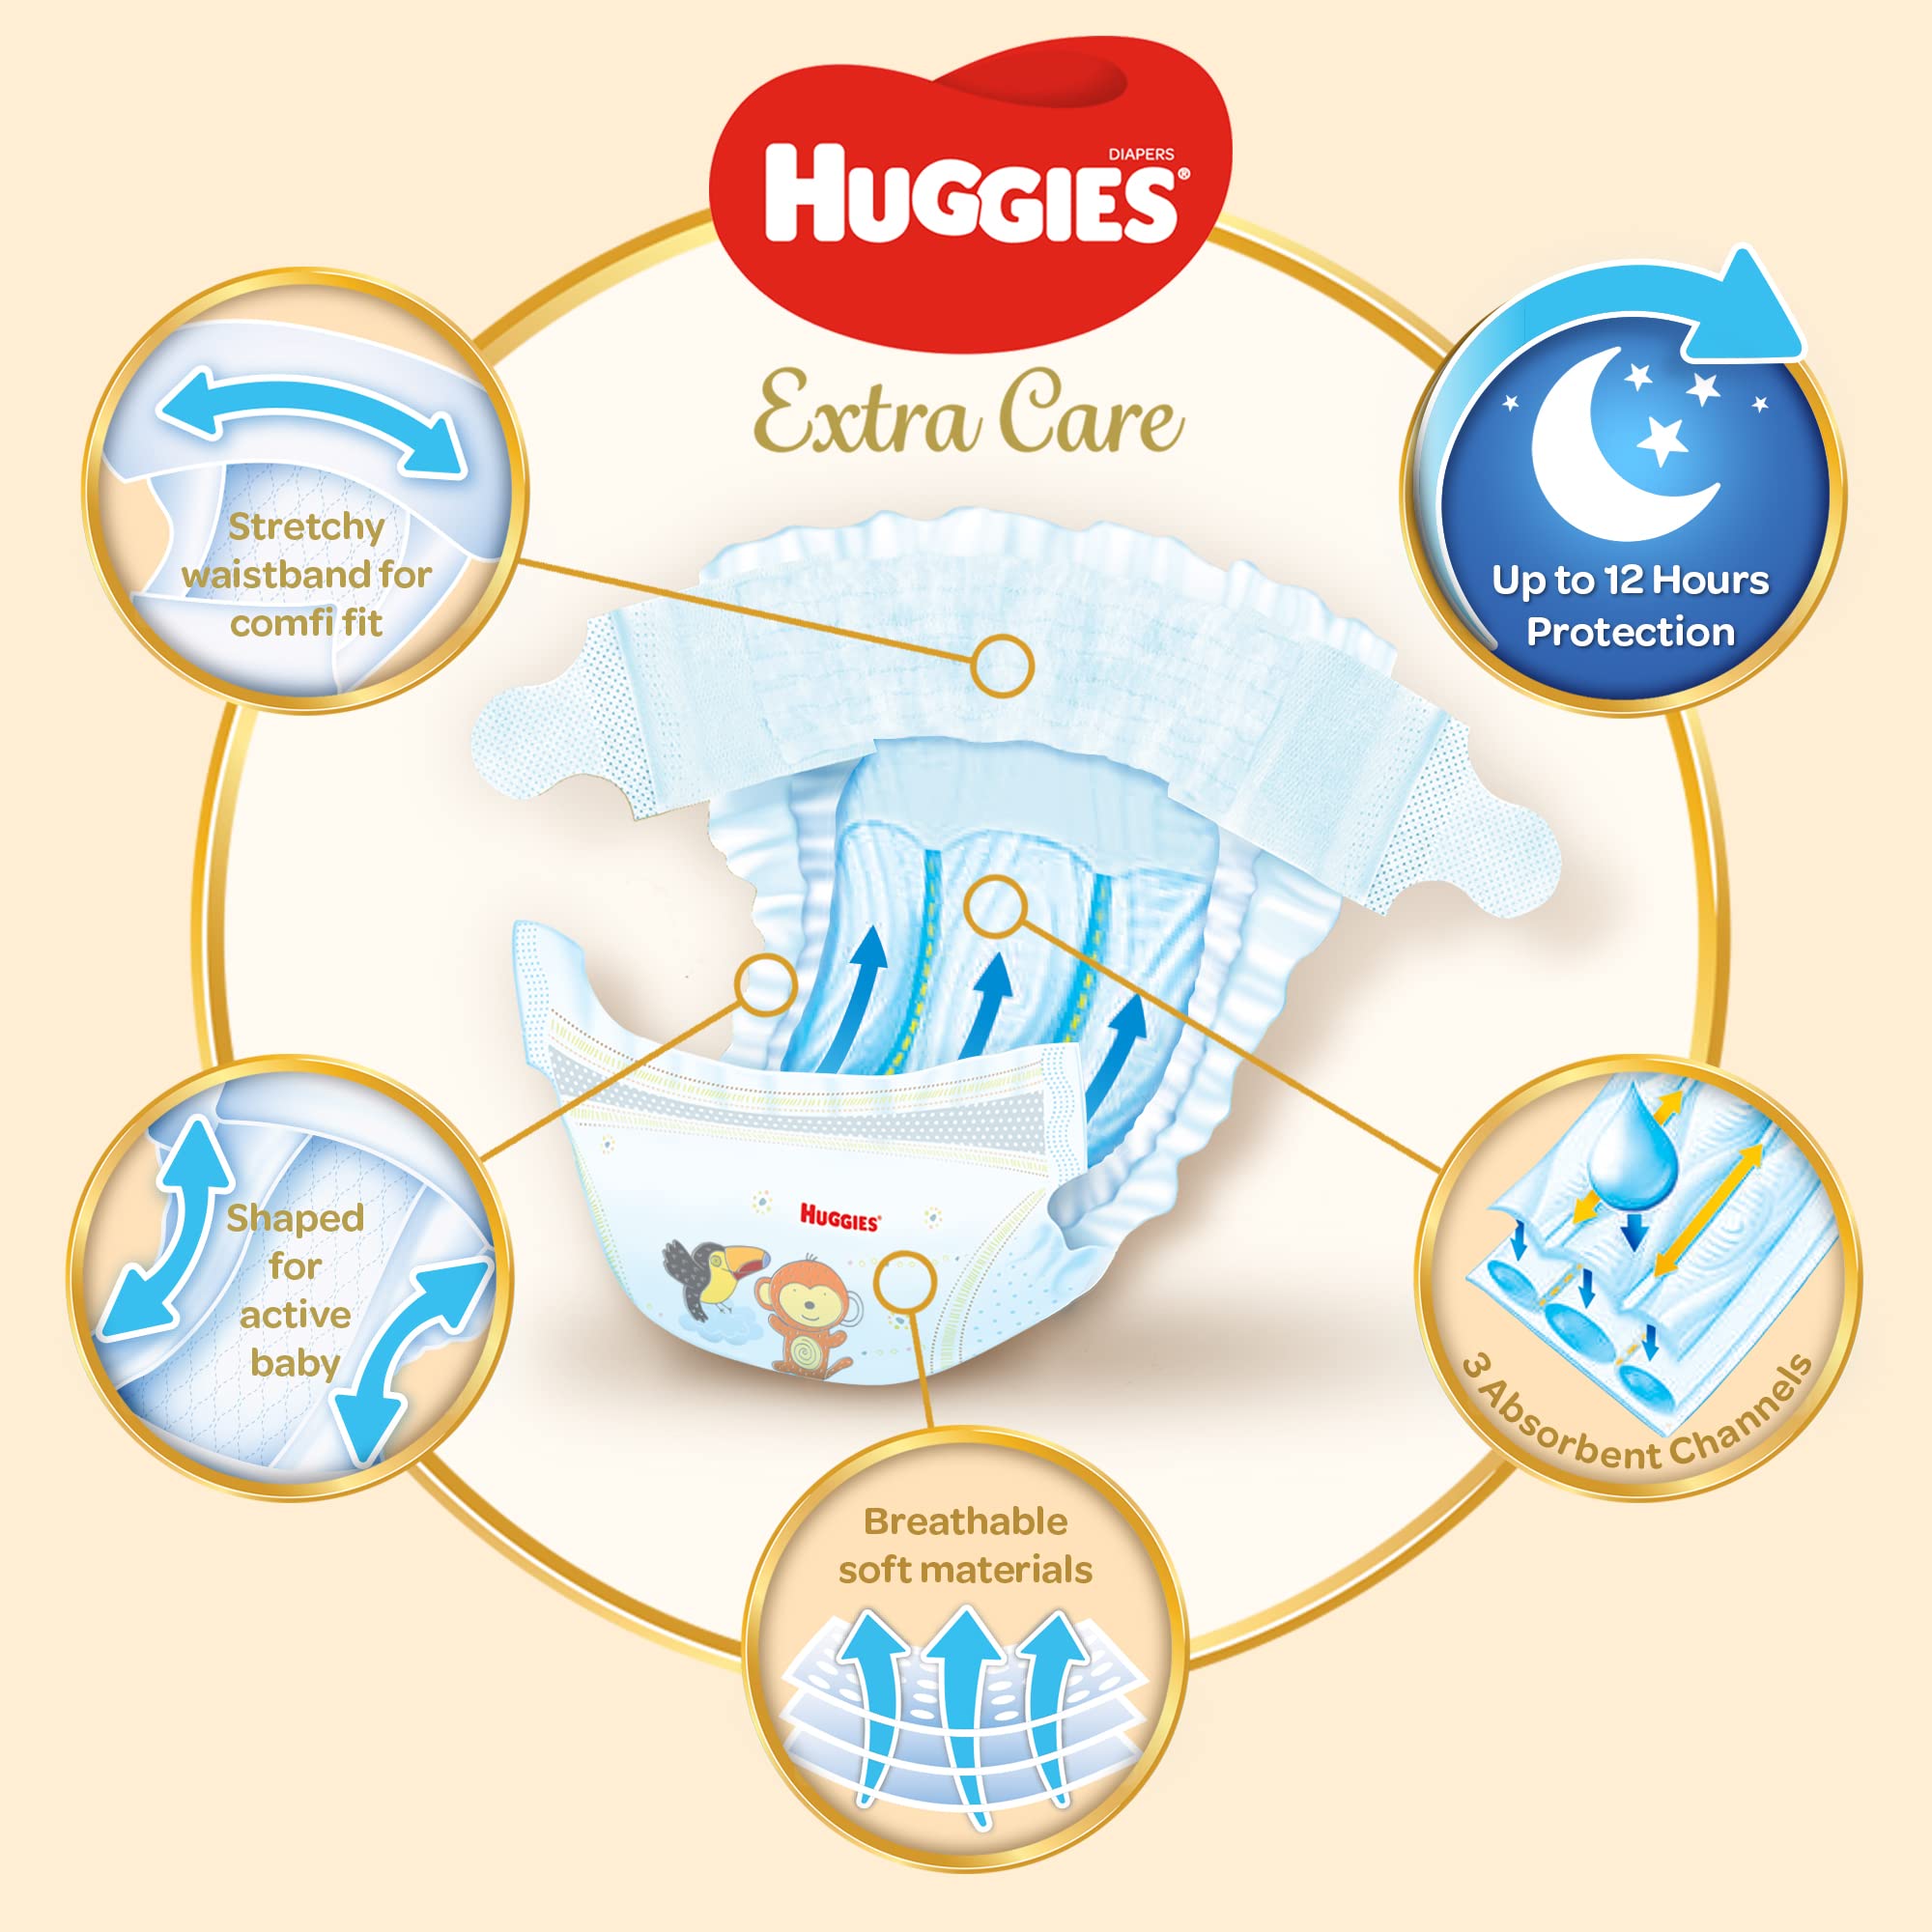 Huggies Extra Care Diaper Size 4, 8-14kg, 68pcs حفاضات اكسترا كير من هاجيز، مقاس 4-- 8-14 كغم 68 قطعة